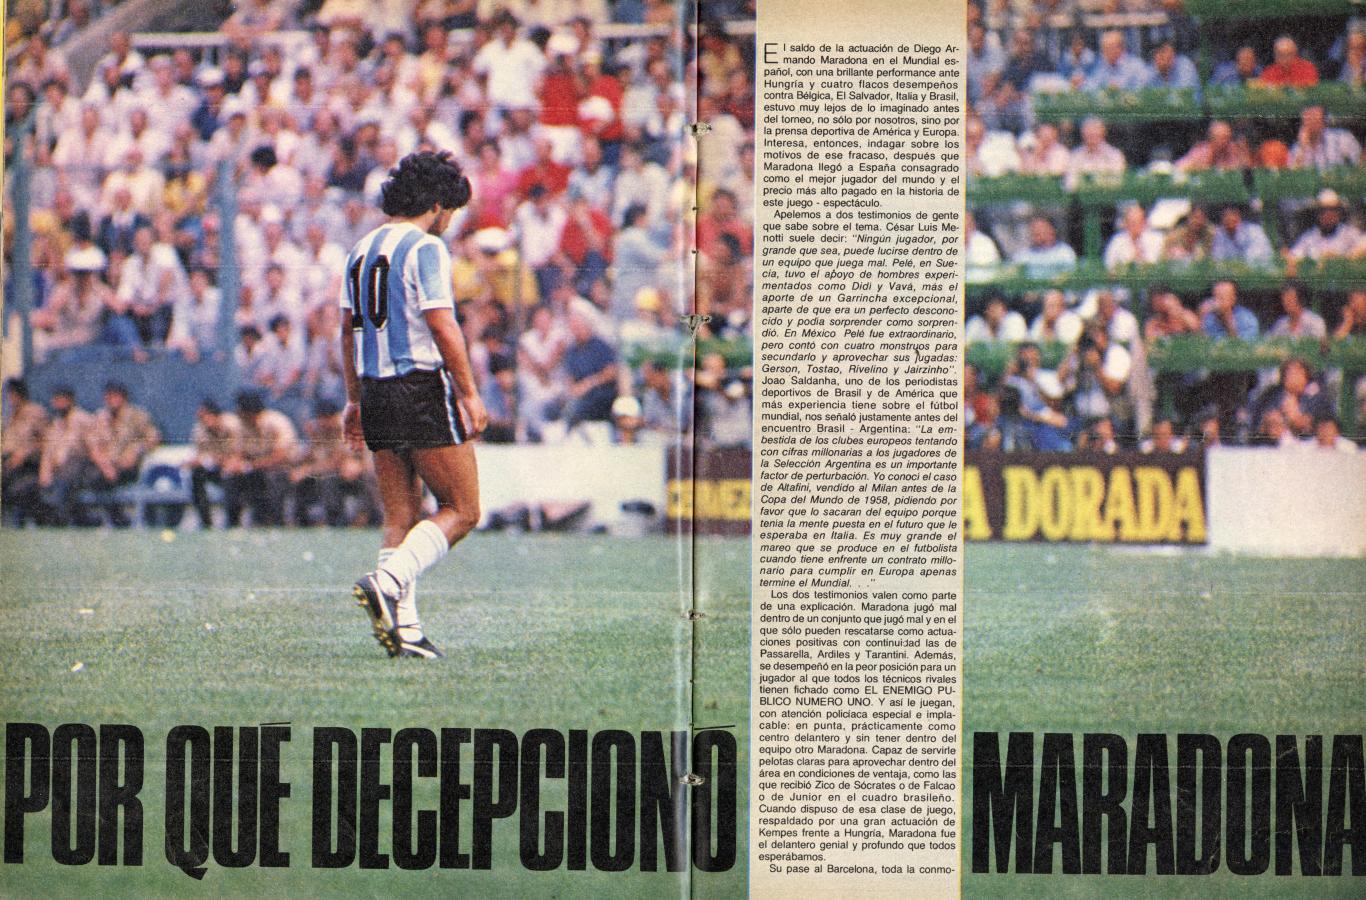 Imagen Por qué decepcionó Maradona, la columna de Juvenal.